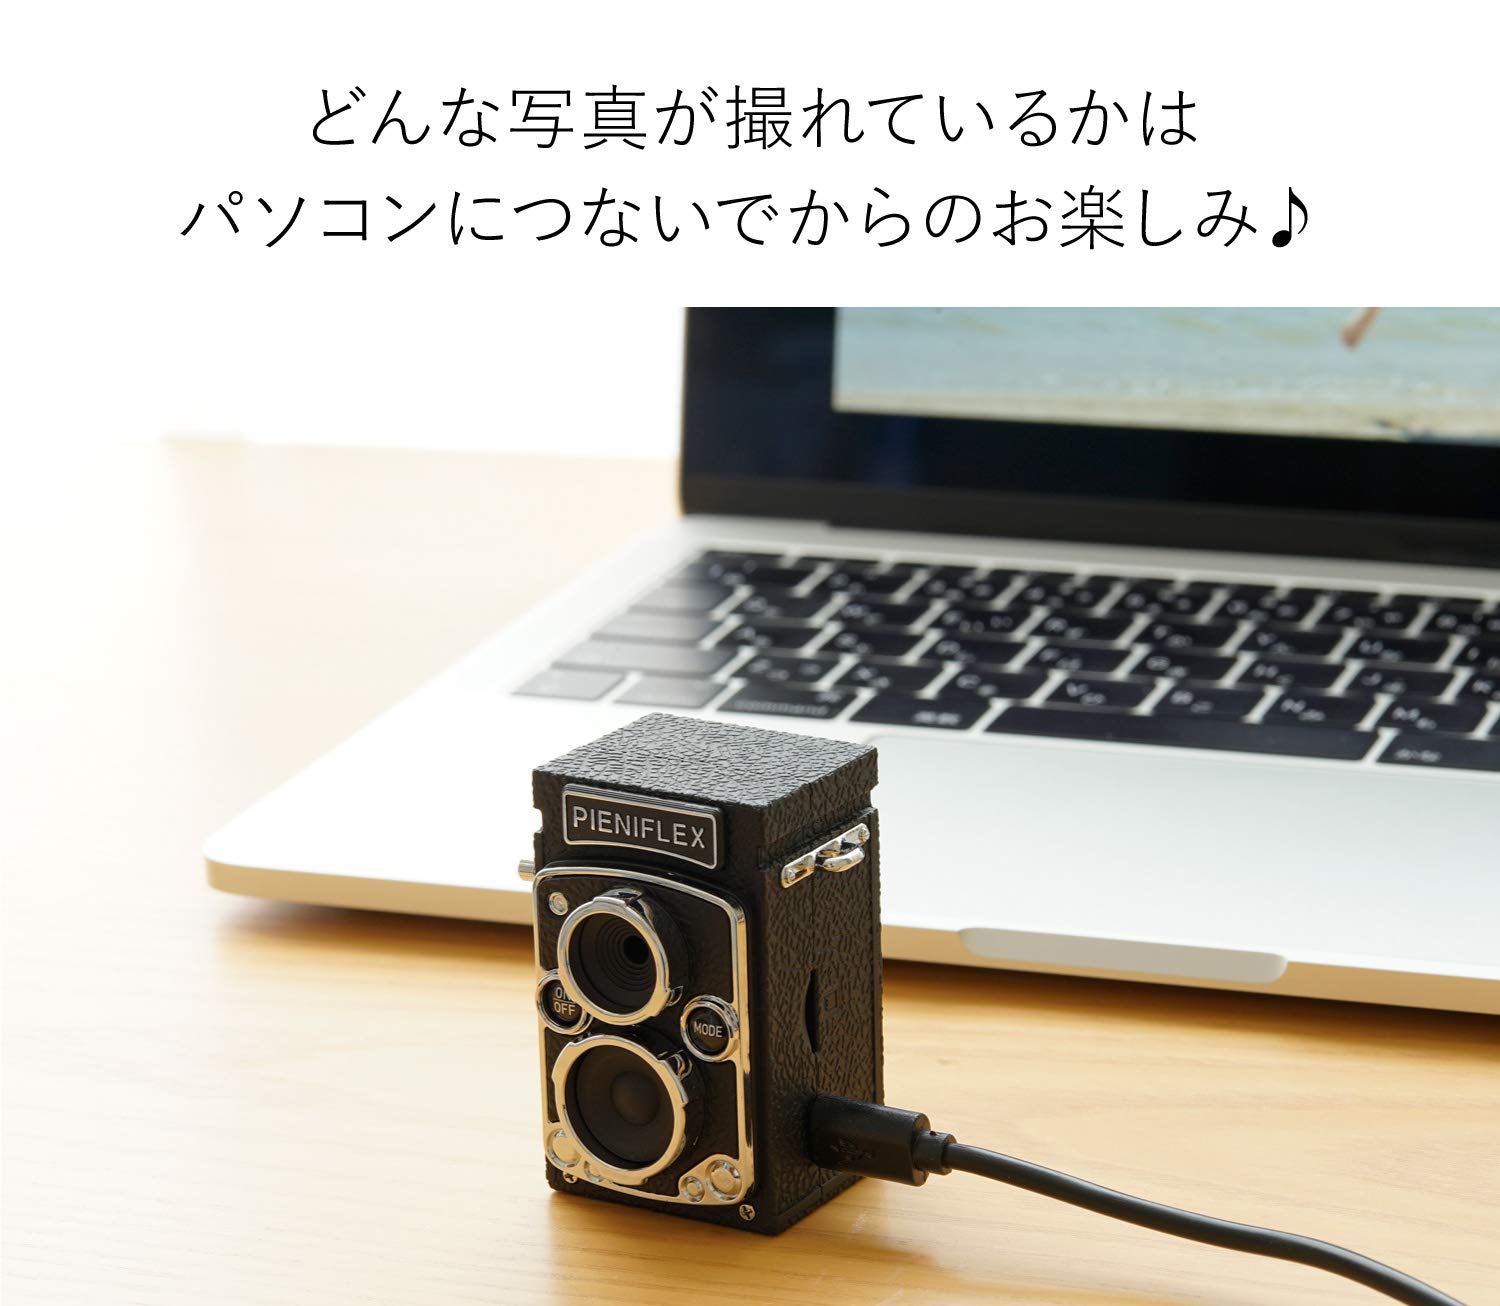 Kenko KC-TY02 Classic Design Toy Digital Camera PIENIFLEX